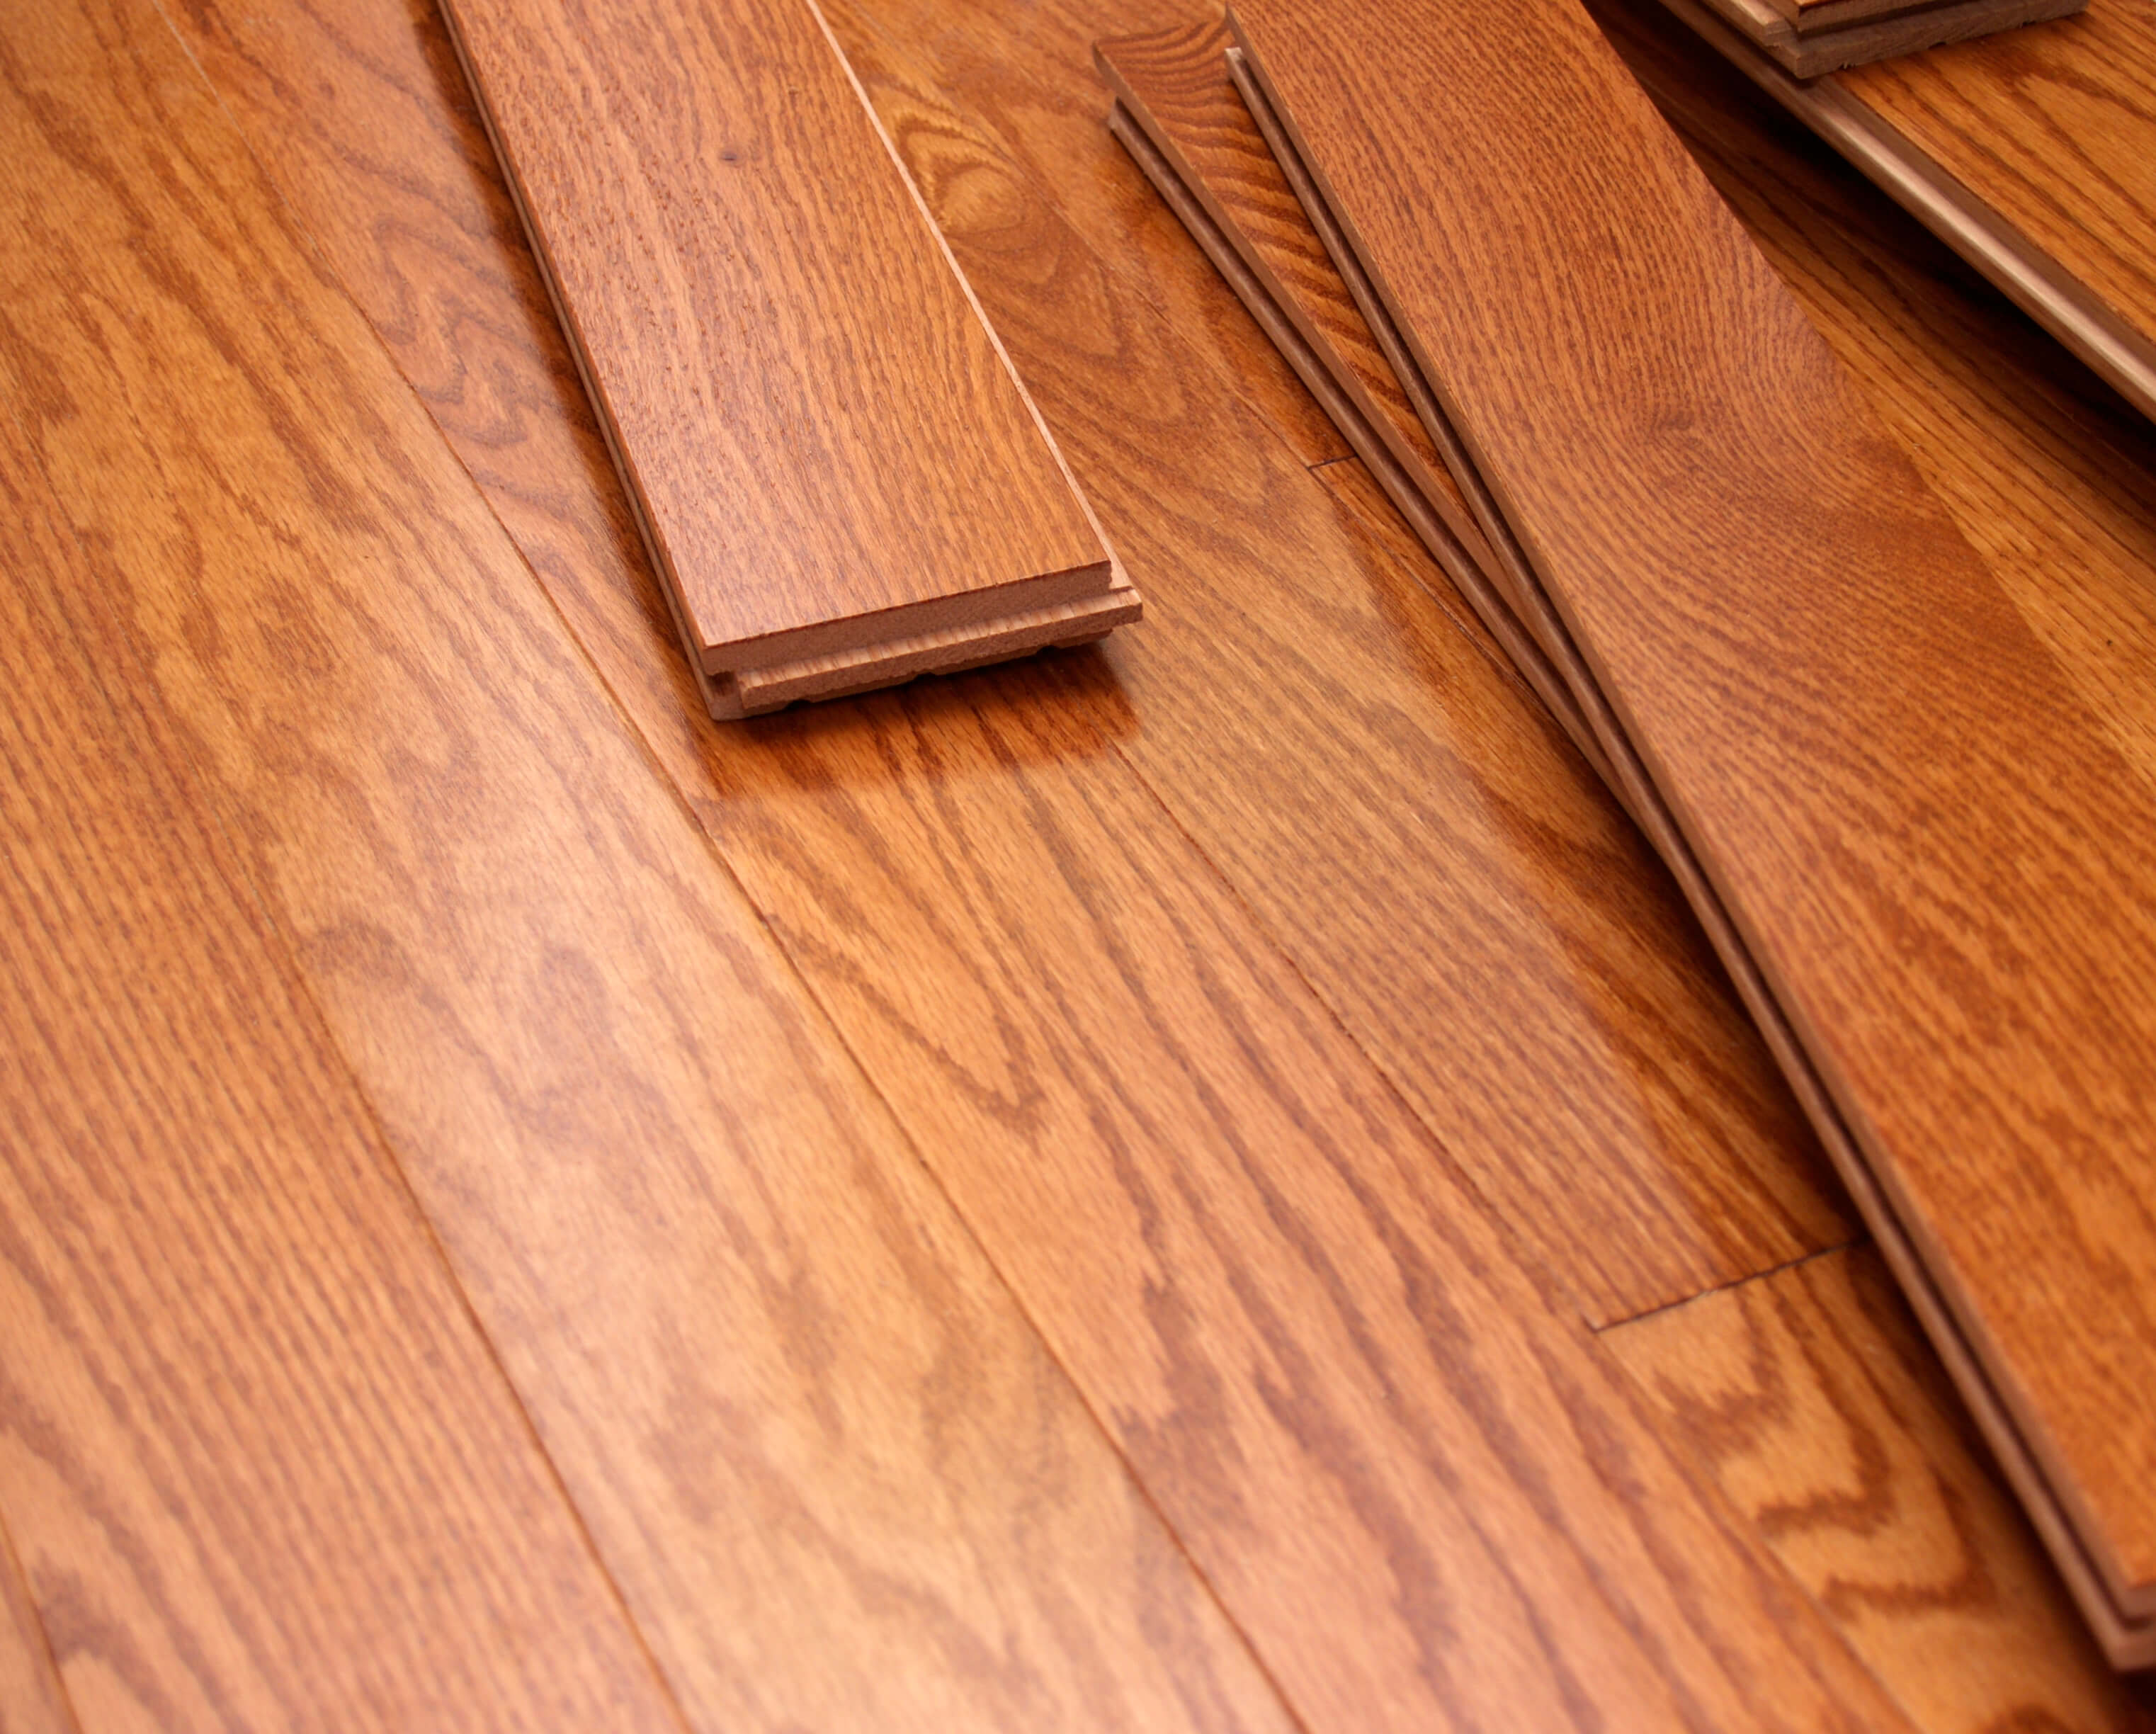 Oak hardwood floor with some loose wood planks